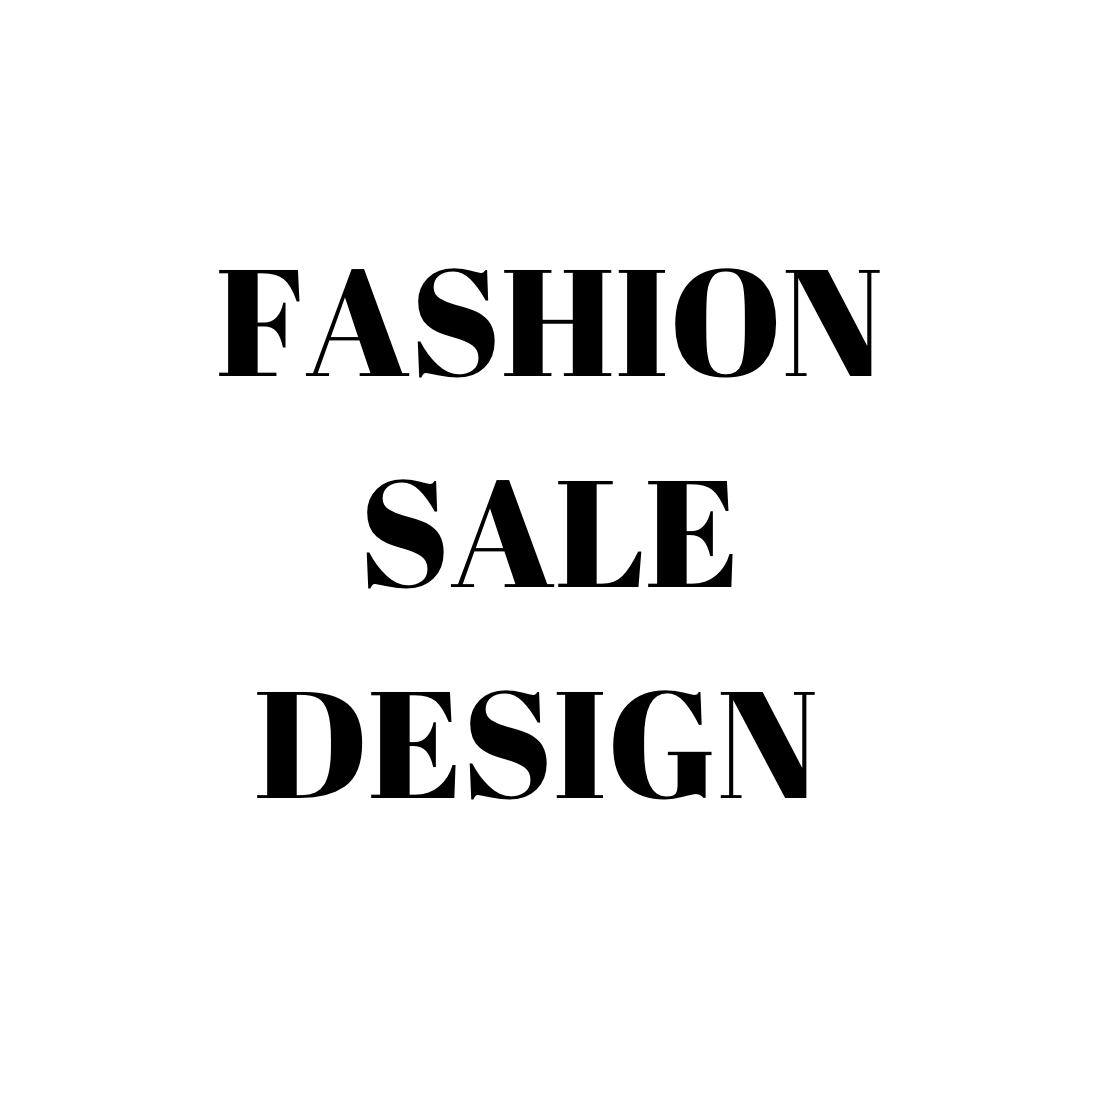 Fashion sale design for social media/ instagram post template cover image.